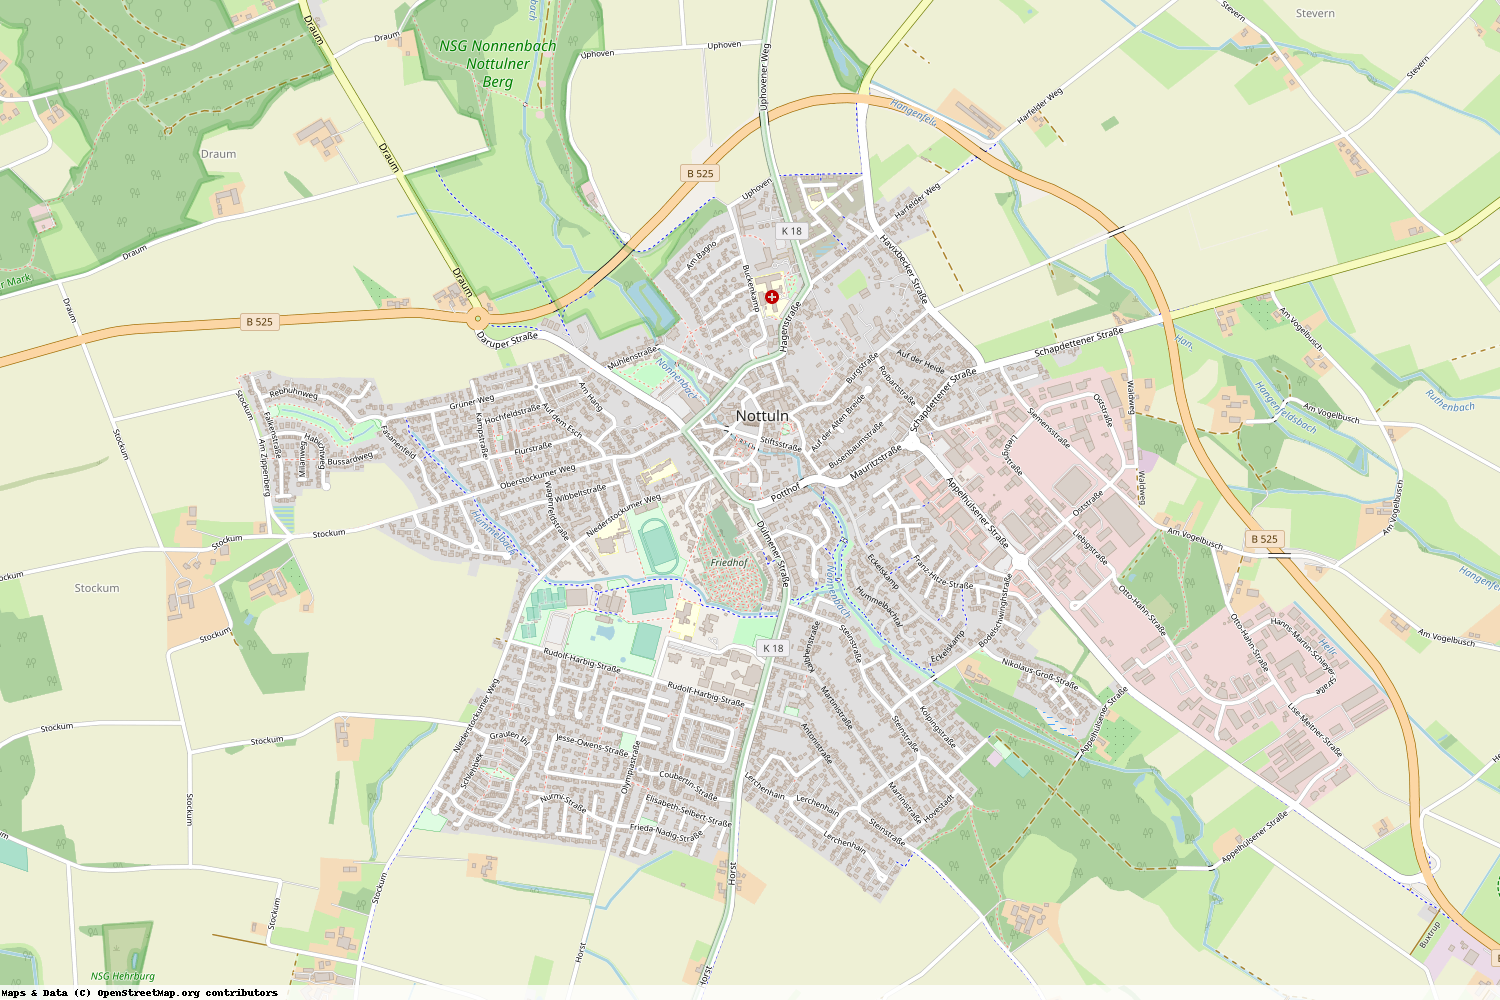 Ist gerade Stromausfall in Nordrhein-Westfalen - Coesfeld - Nottuln?